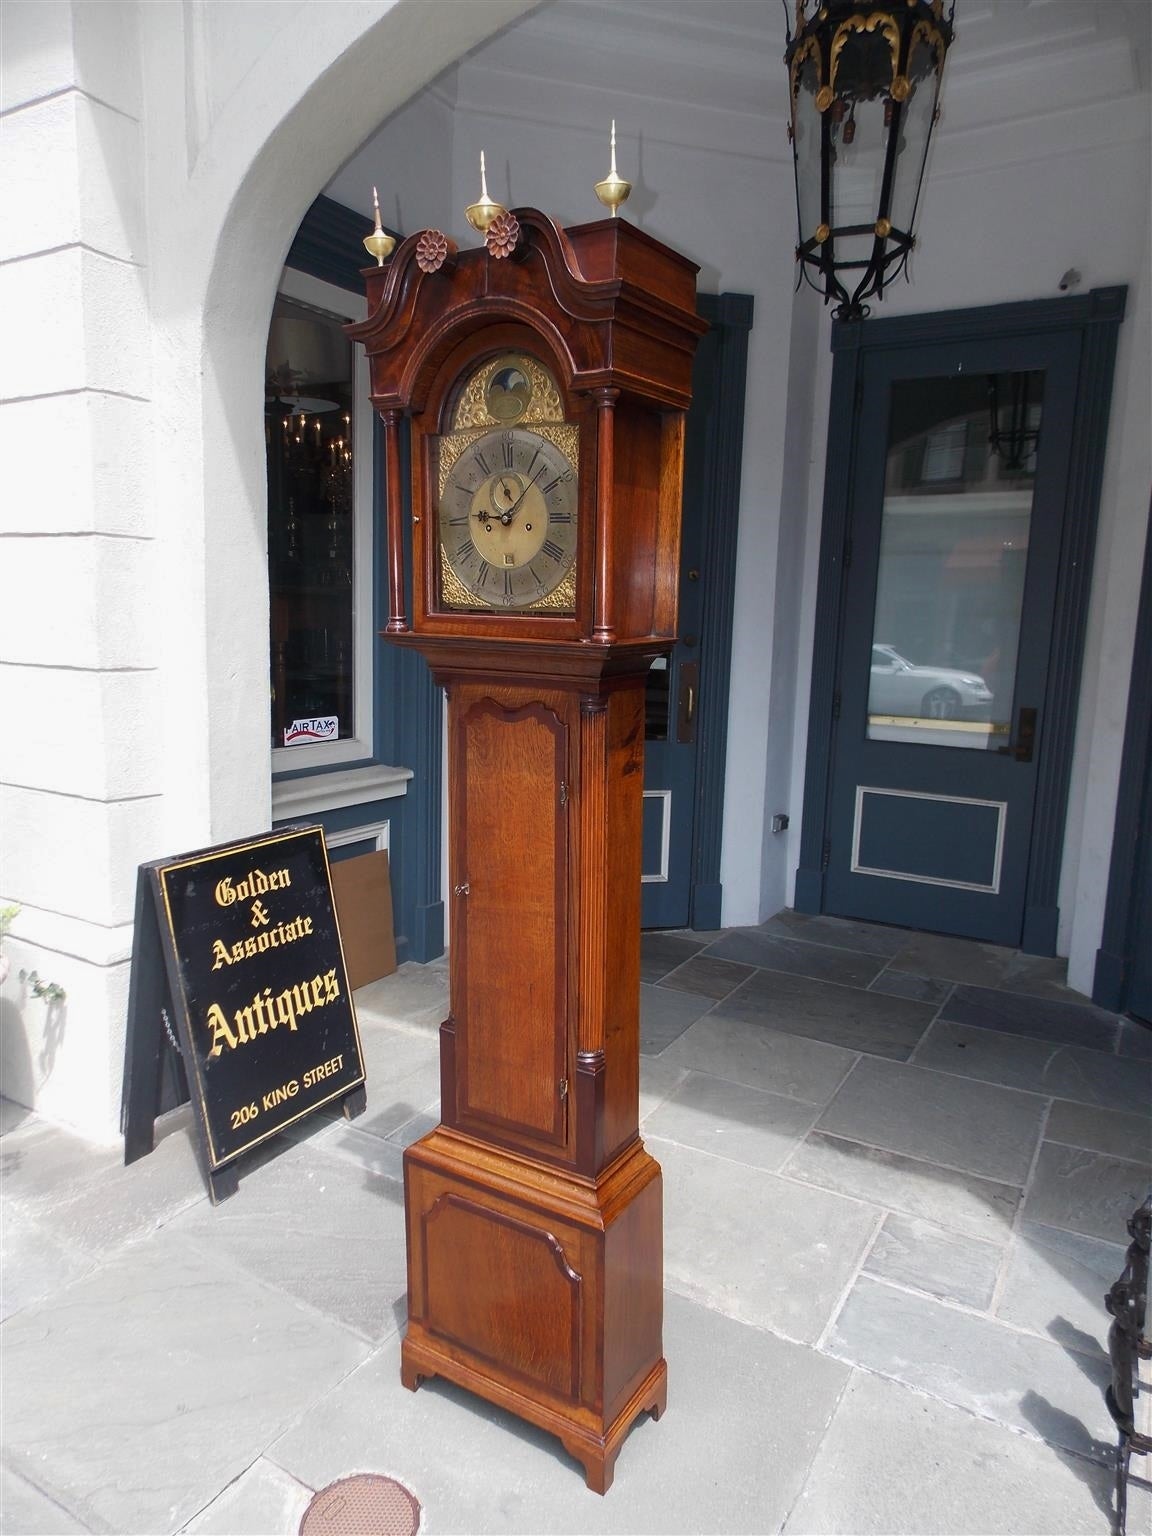 17th century grandfather clock